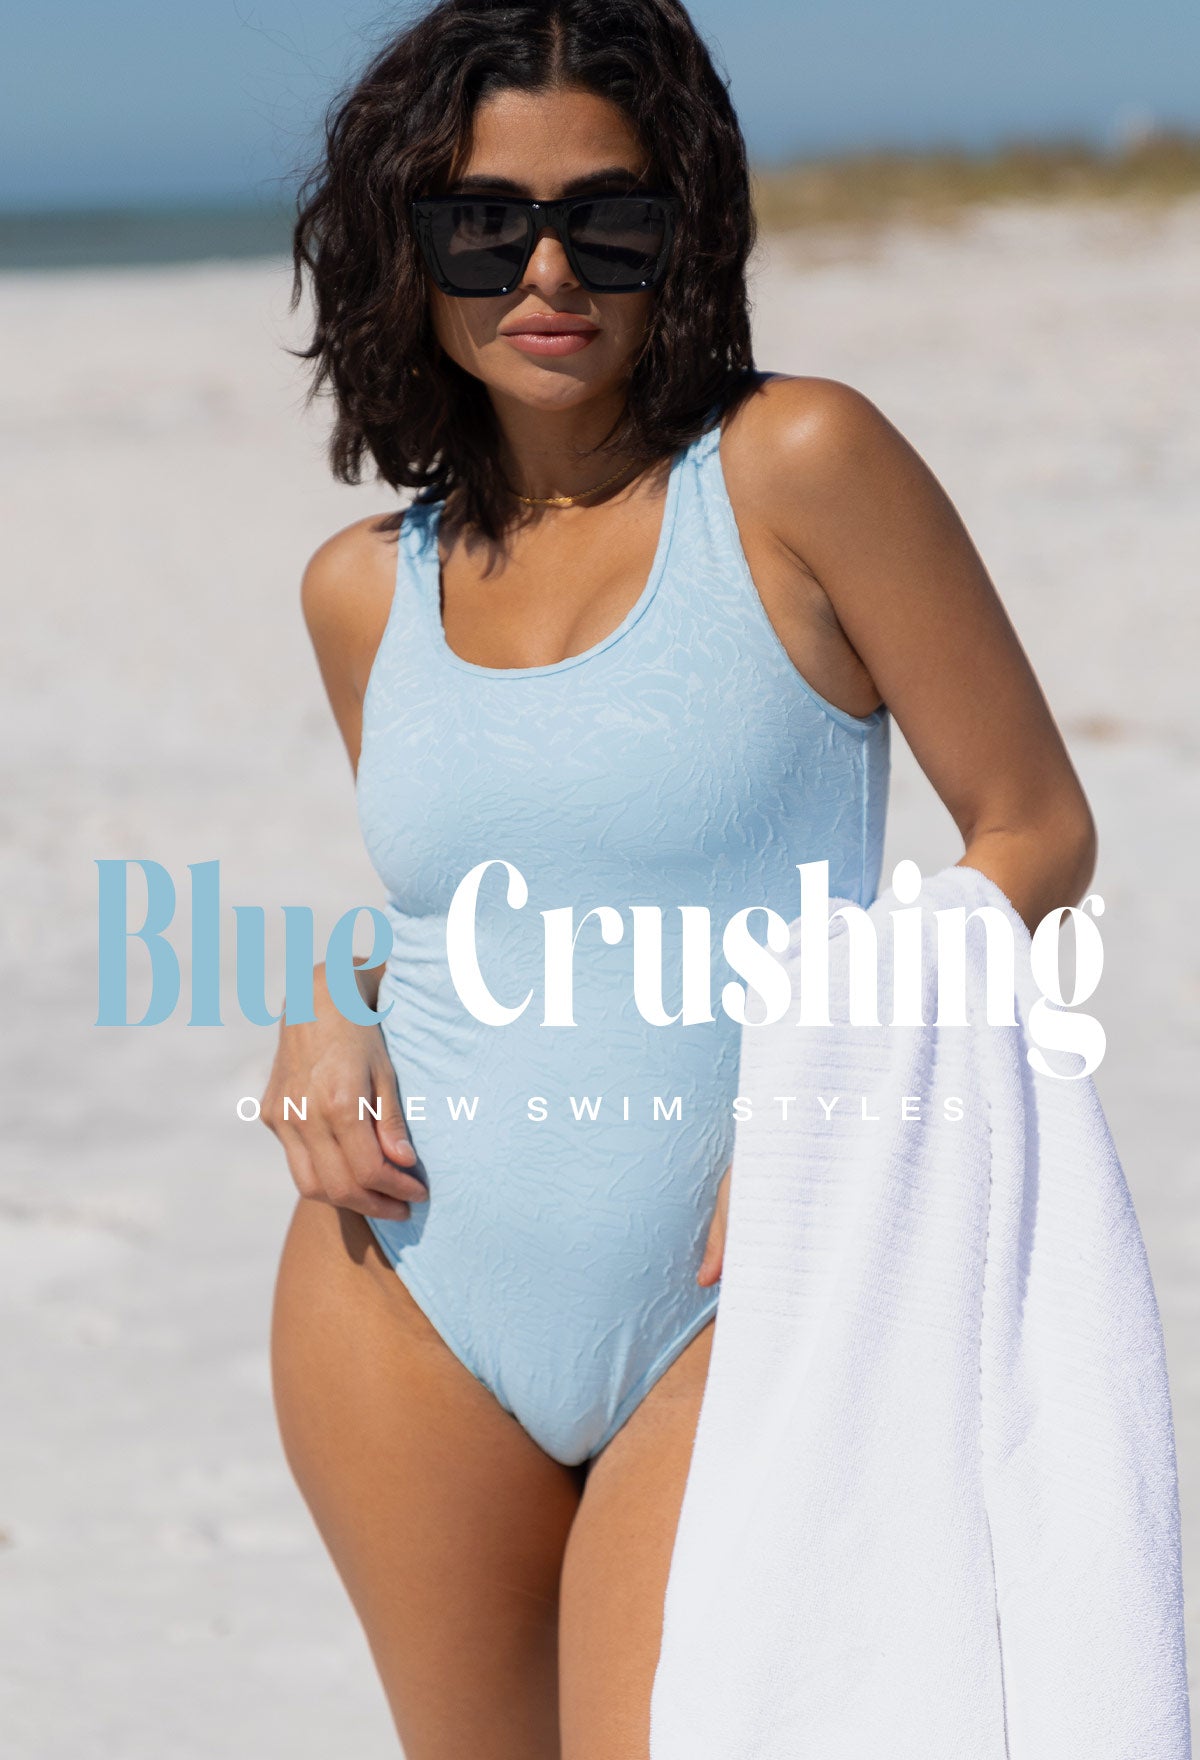 Blue Crushing on new swim styles! 